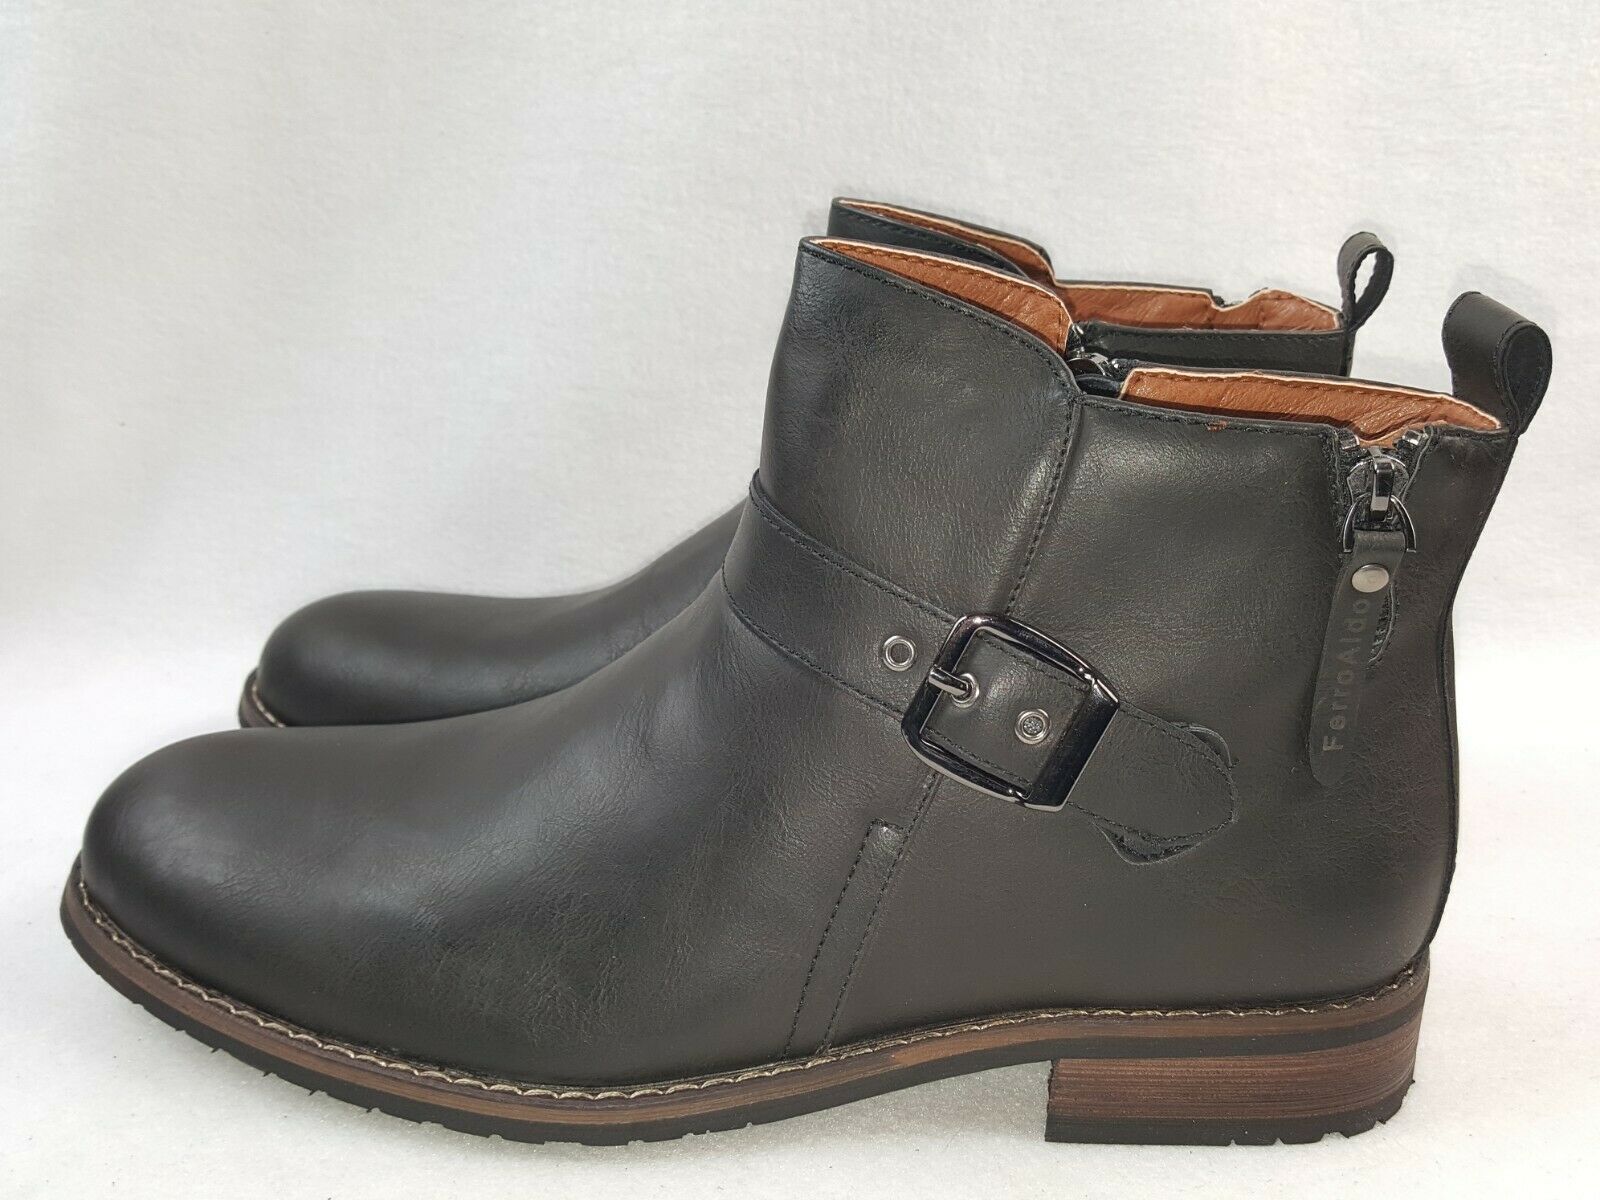 Dalton By Ferro Aldo Men's Ankle Boots with Classic Buckle Detail, Black Size 11